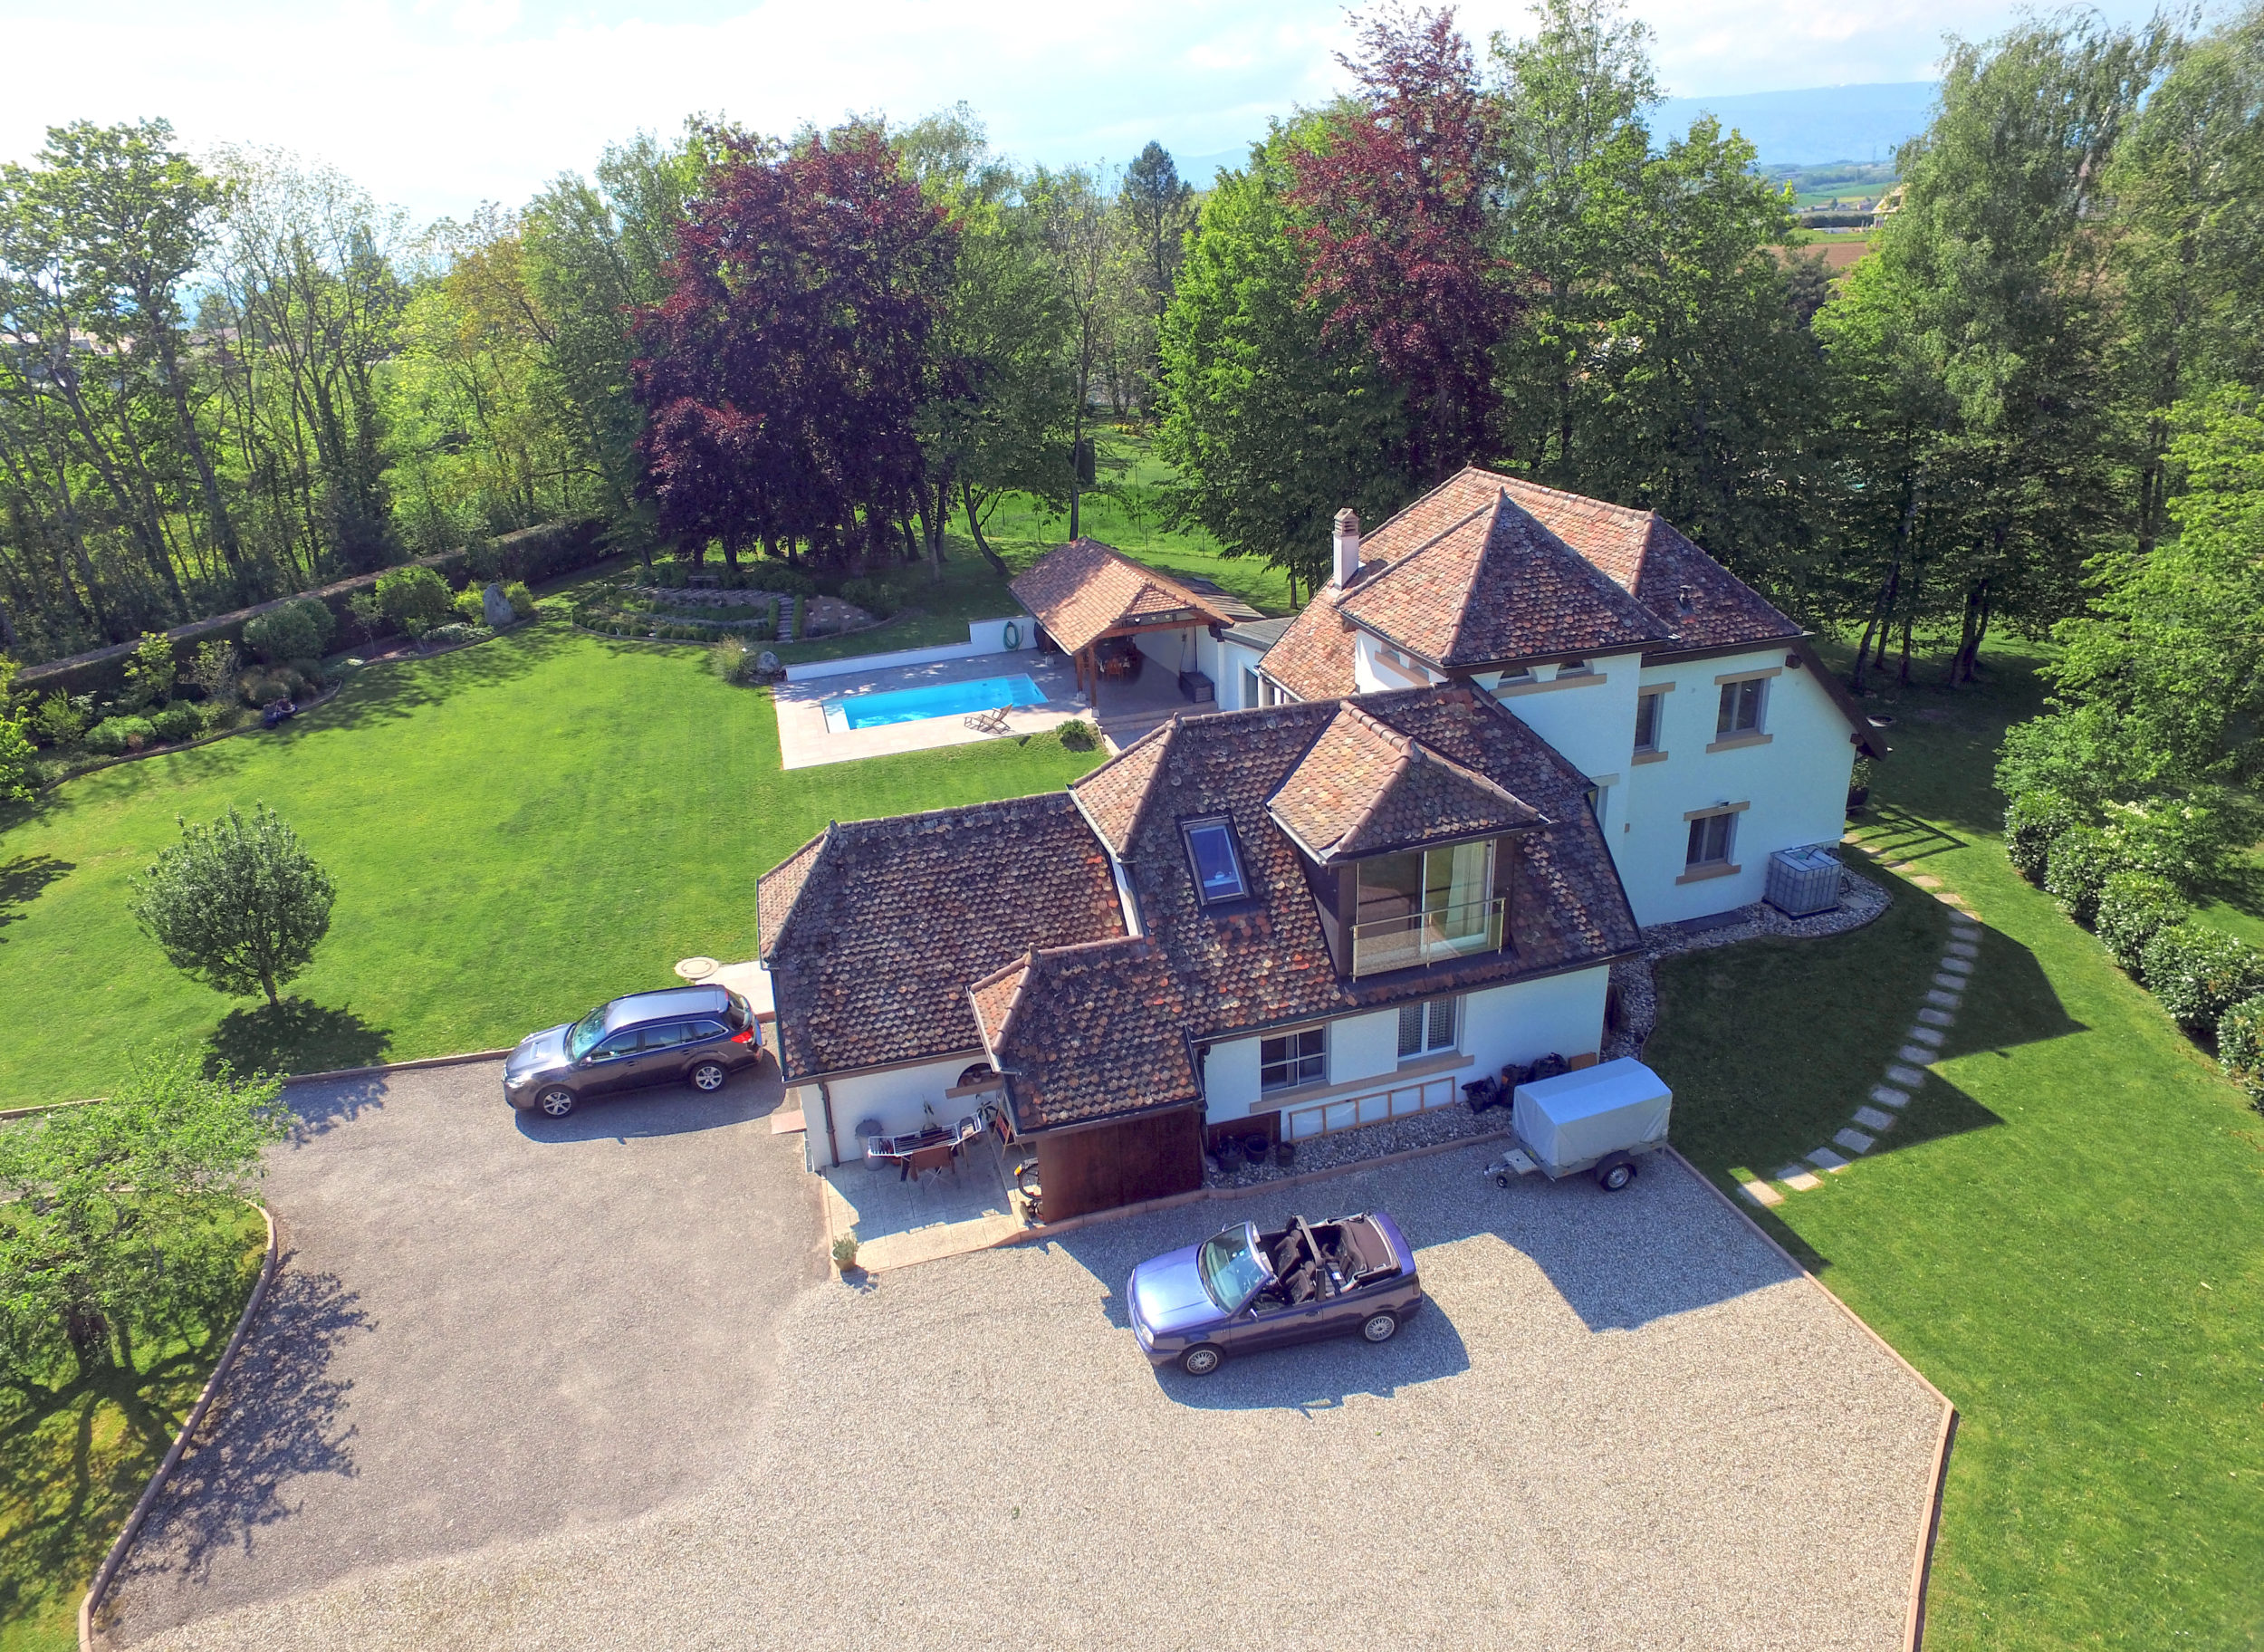 Aerial view - Drone - Villa in Denens